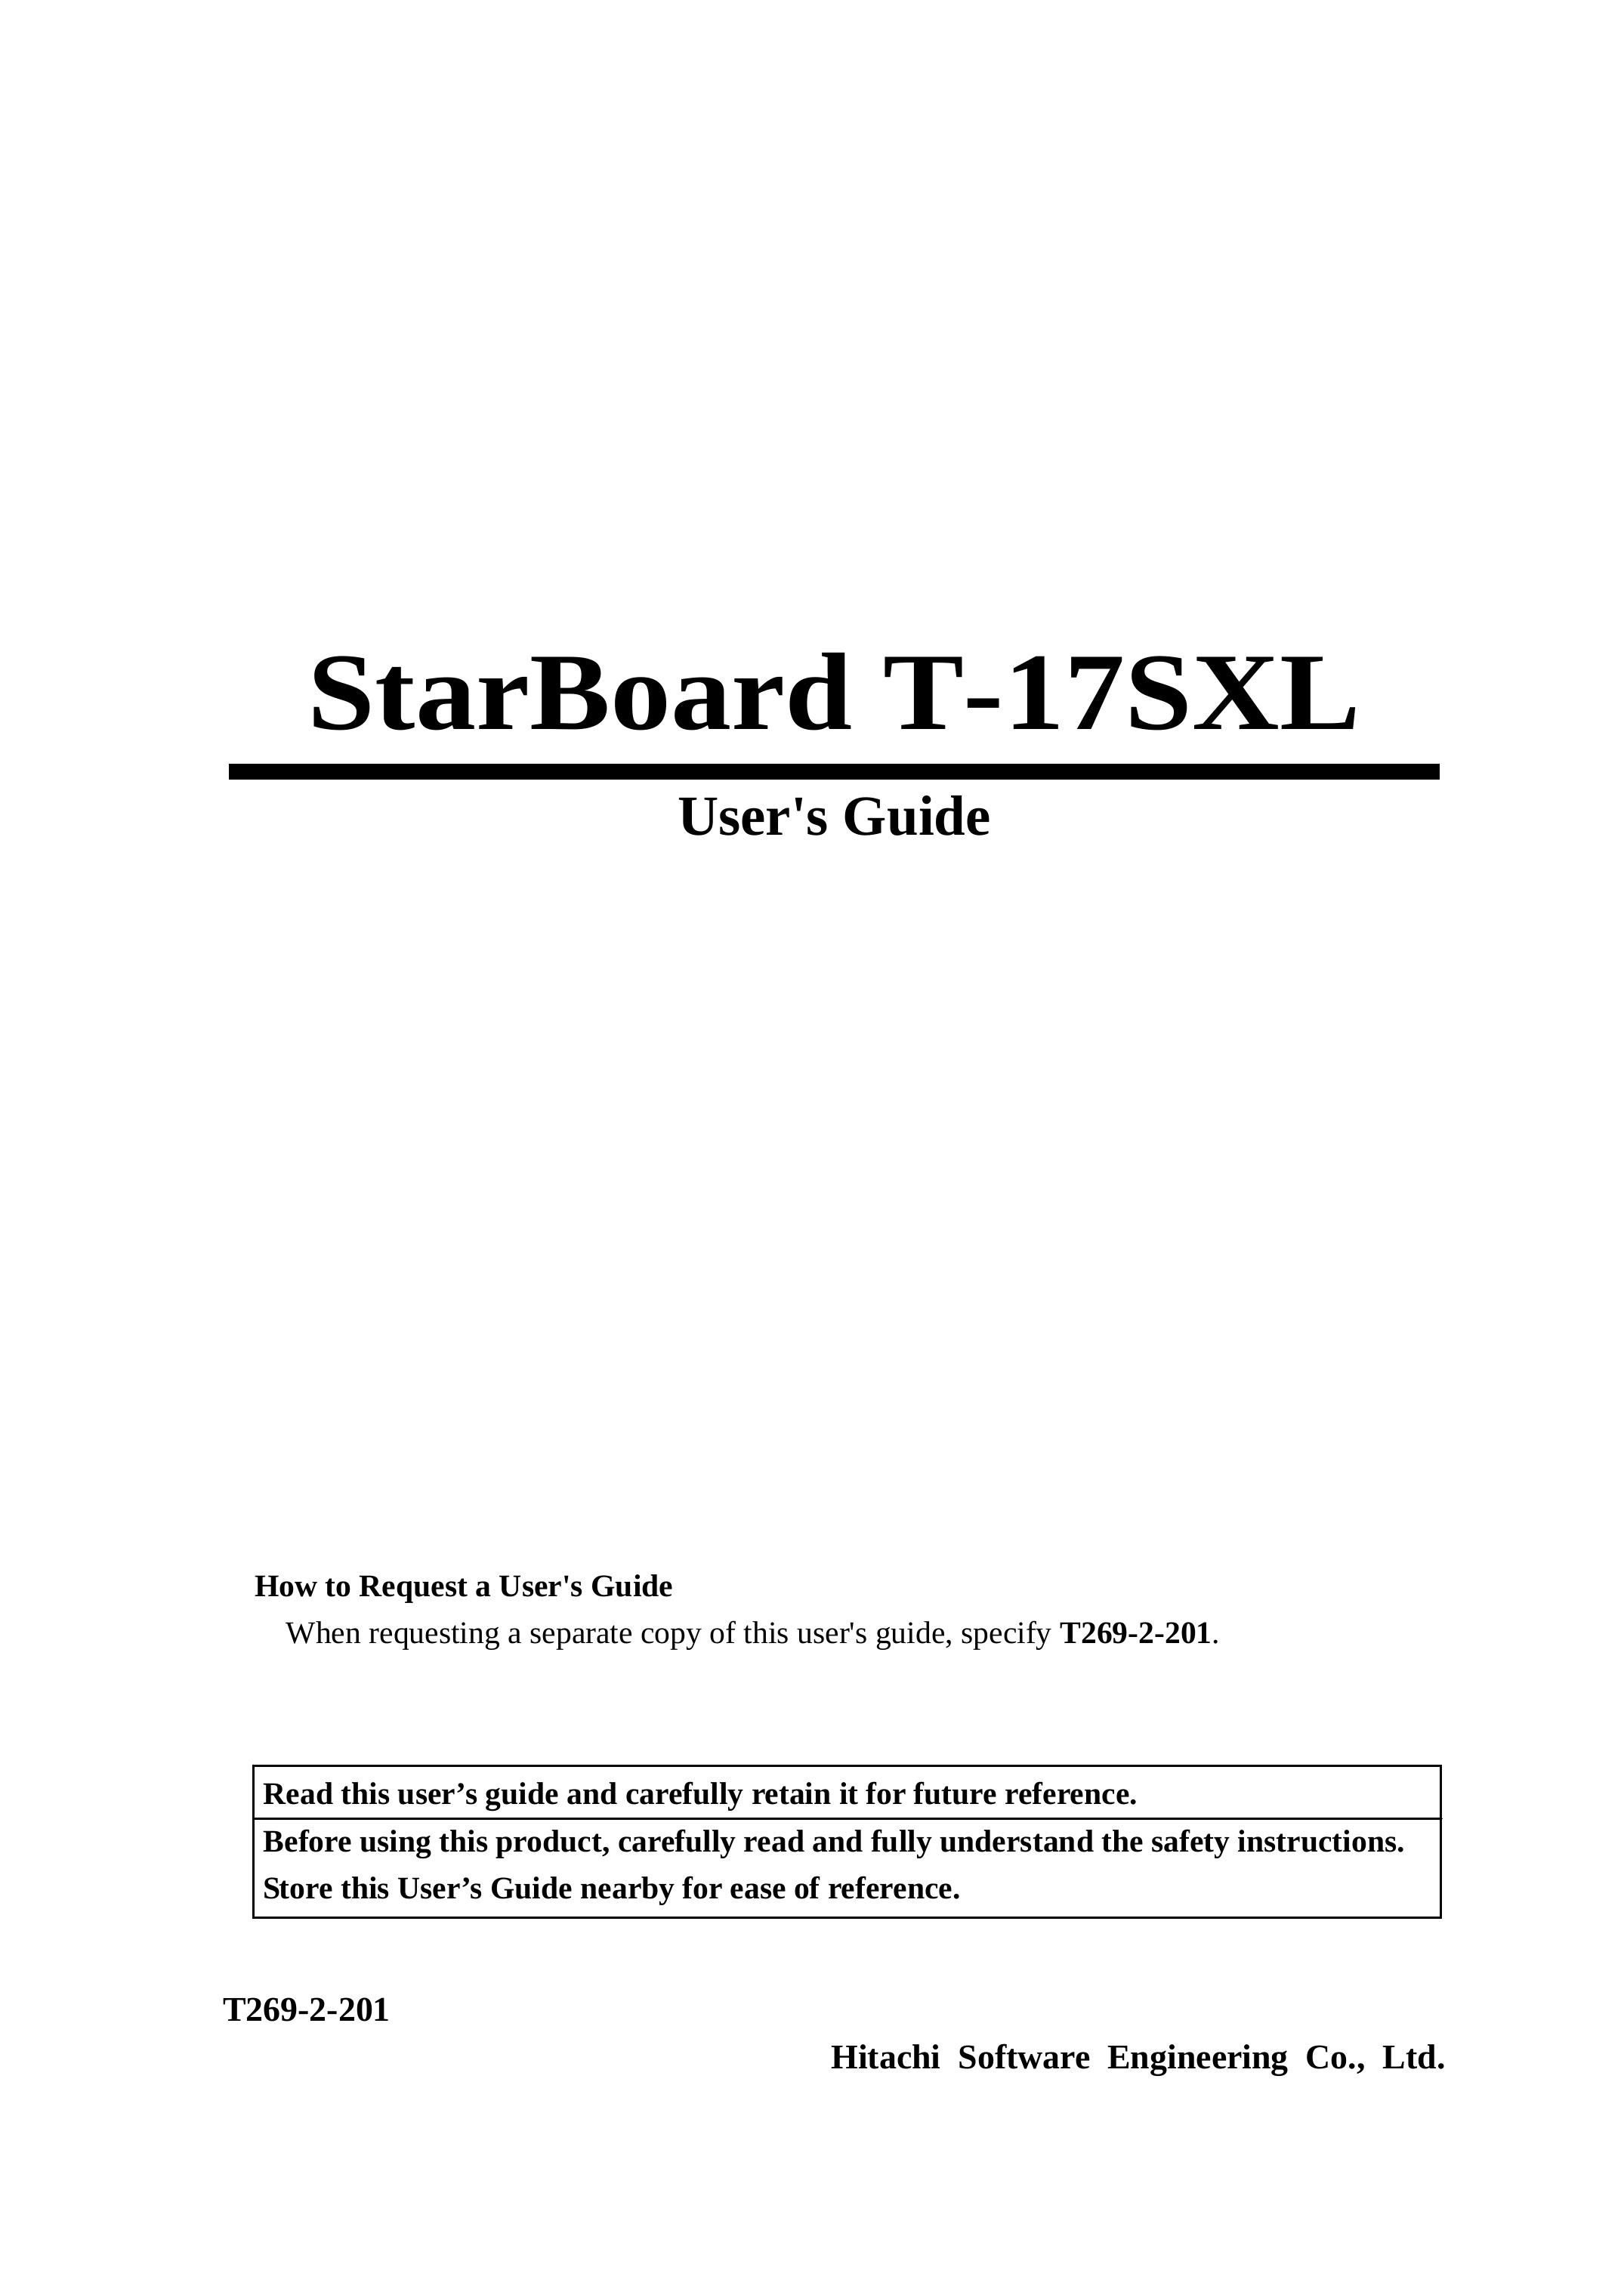 Hitachi starboard Outboard Motor User Manual